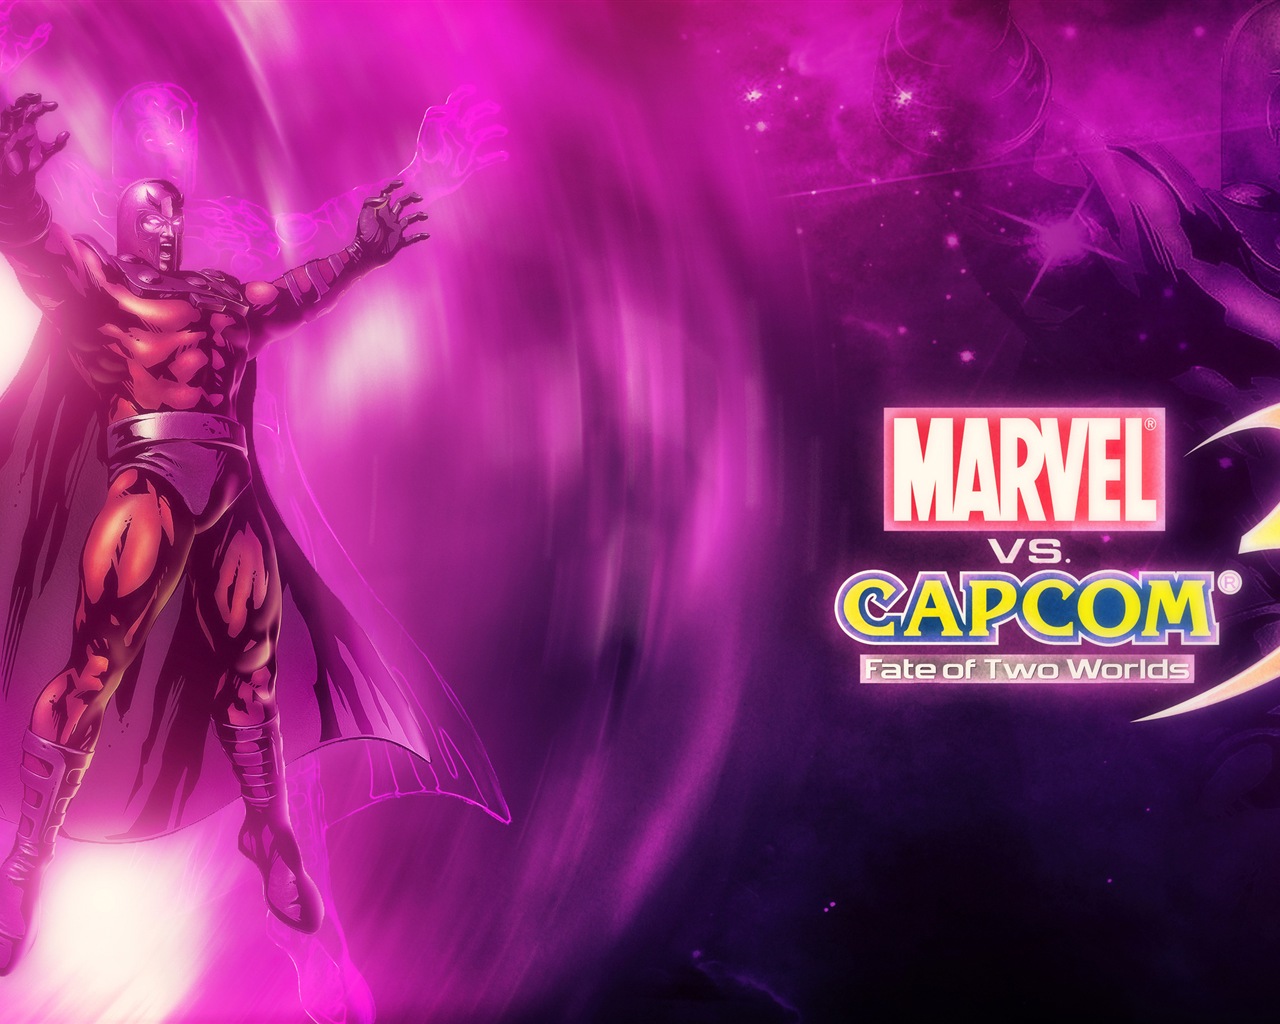 Marvel VS. Capcom 3: Fate of Two Worlds 漫畫英雄VS.卡普空3 高清遊戲壁紙 #7 - 1280x1024